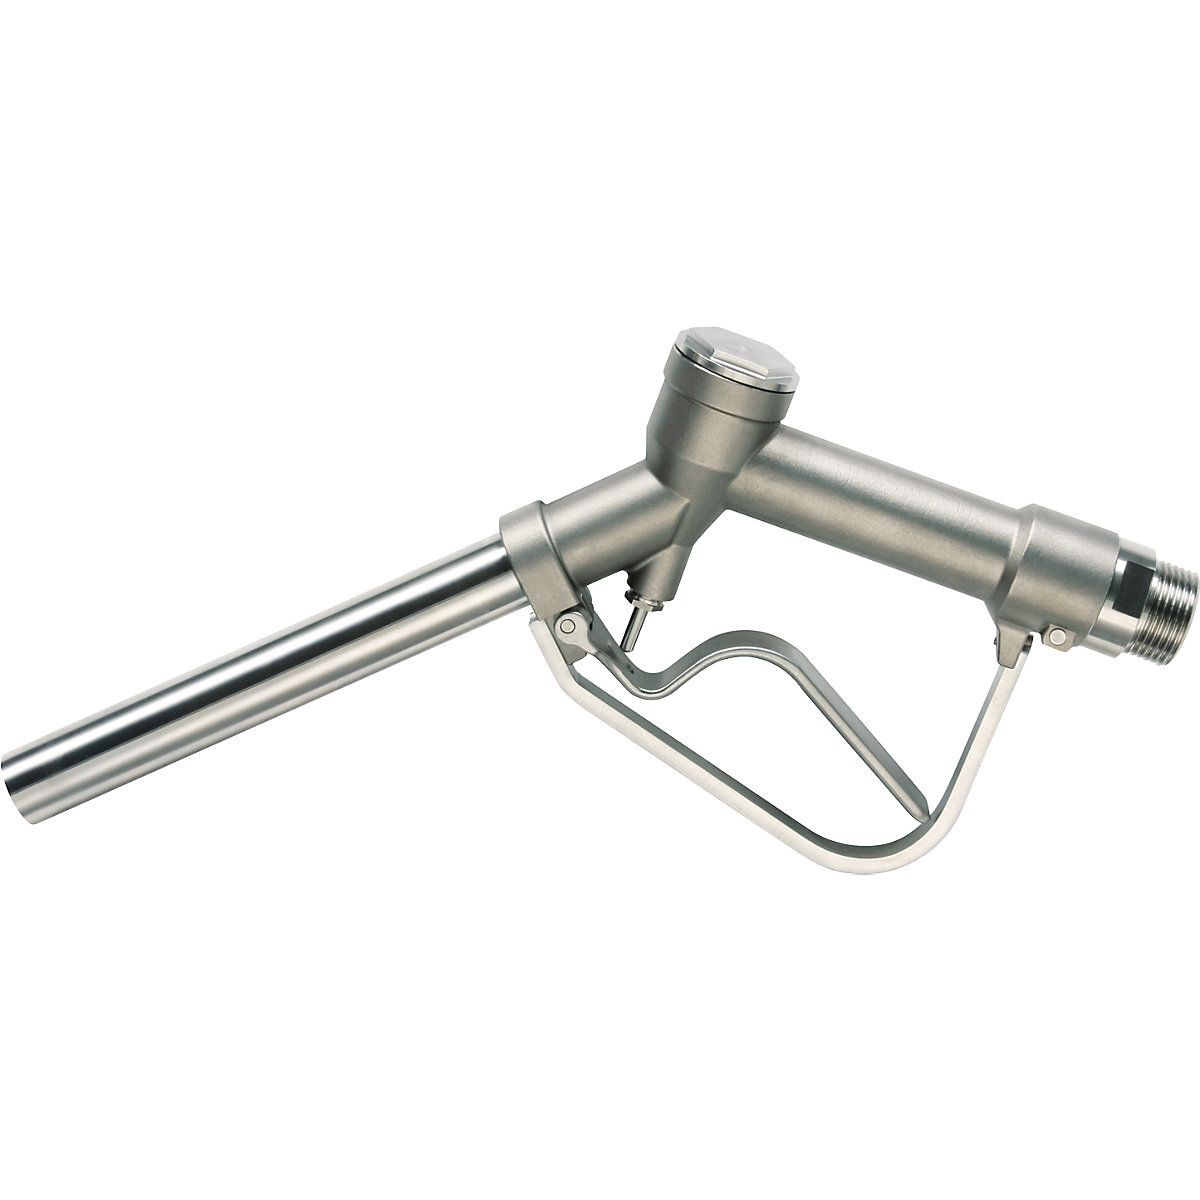 Pistola erogatrice manuale in acciaio inox 1.4571 – Jessberger